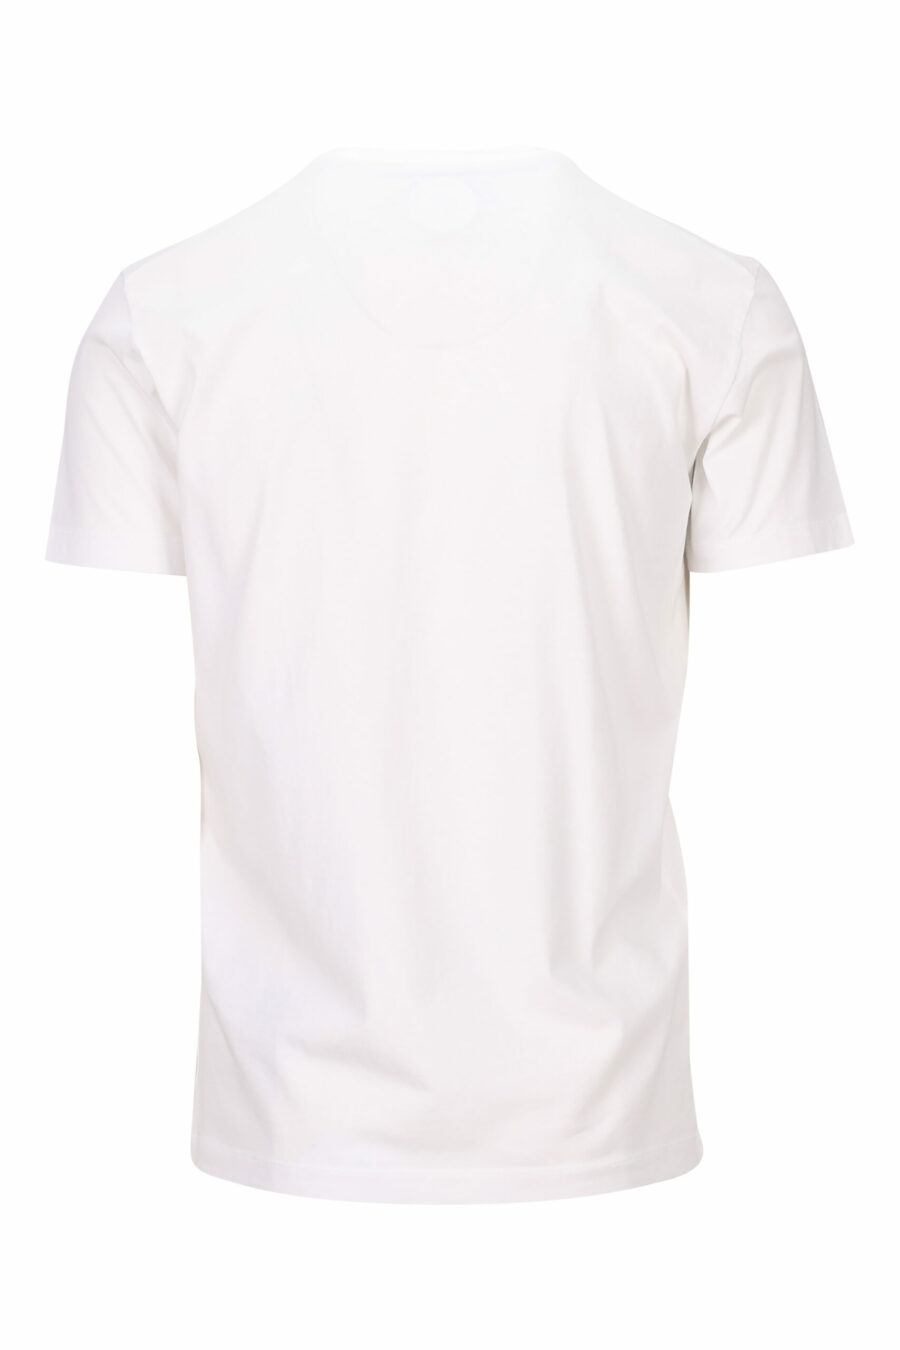 Camiseta blanca con maxilogo "ceresio 9, milano" - 8054148504779 1 scaled